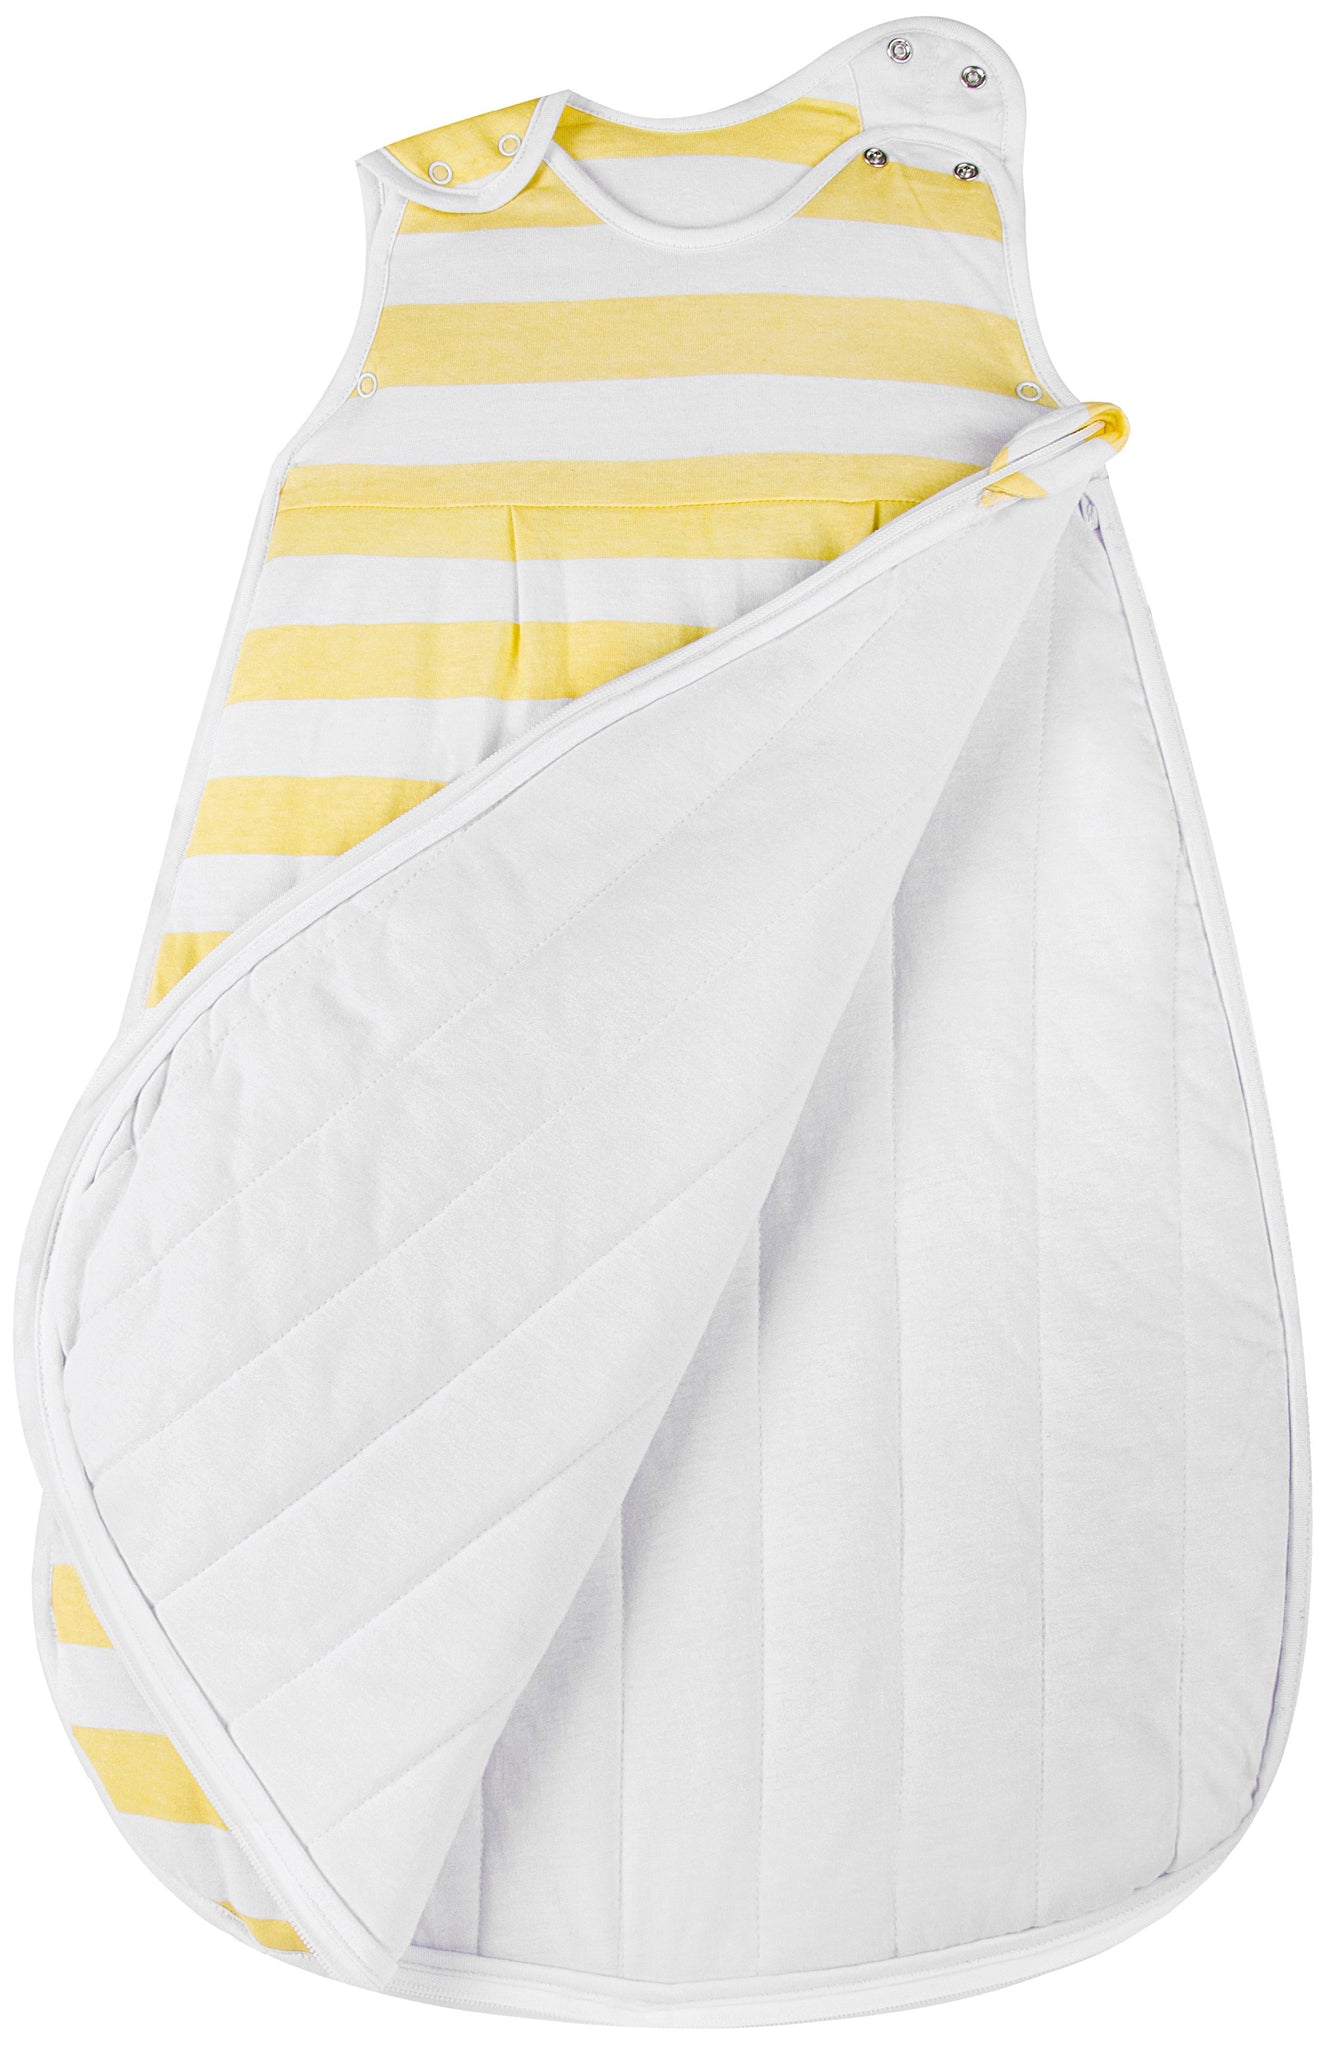 Snoozebag Baby Sleeping Bag Lemon Stripe 18-36 Months - 1.0 Tog